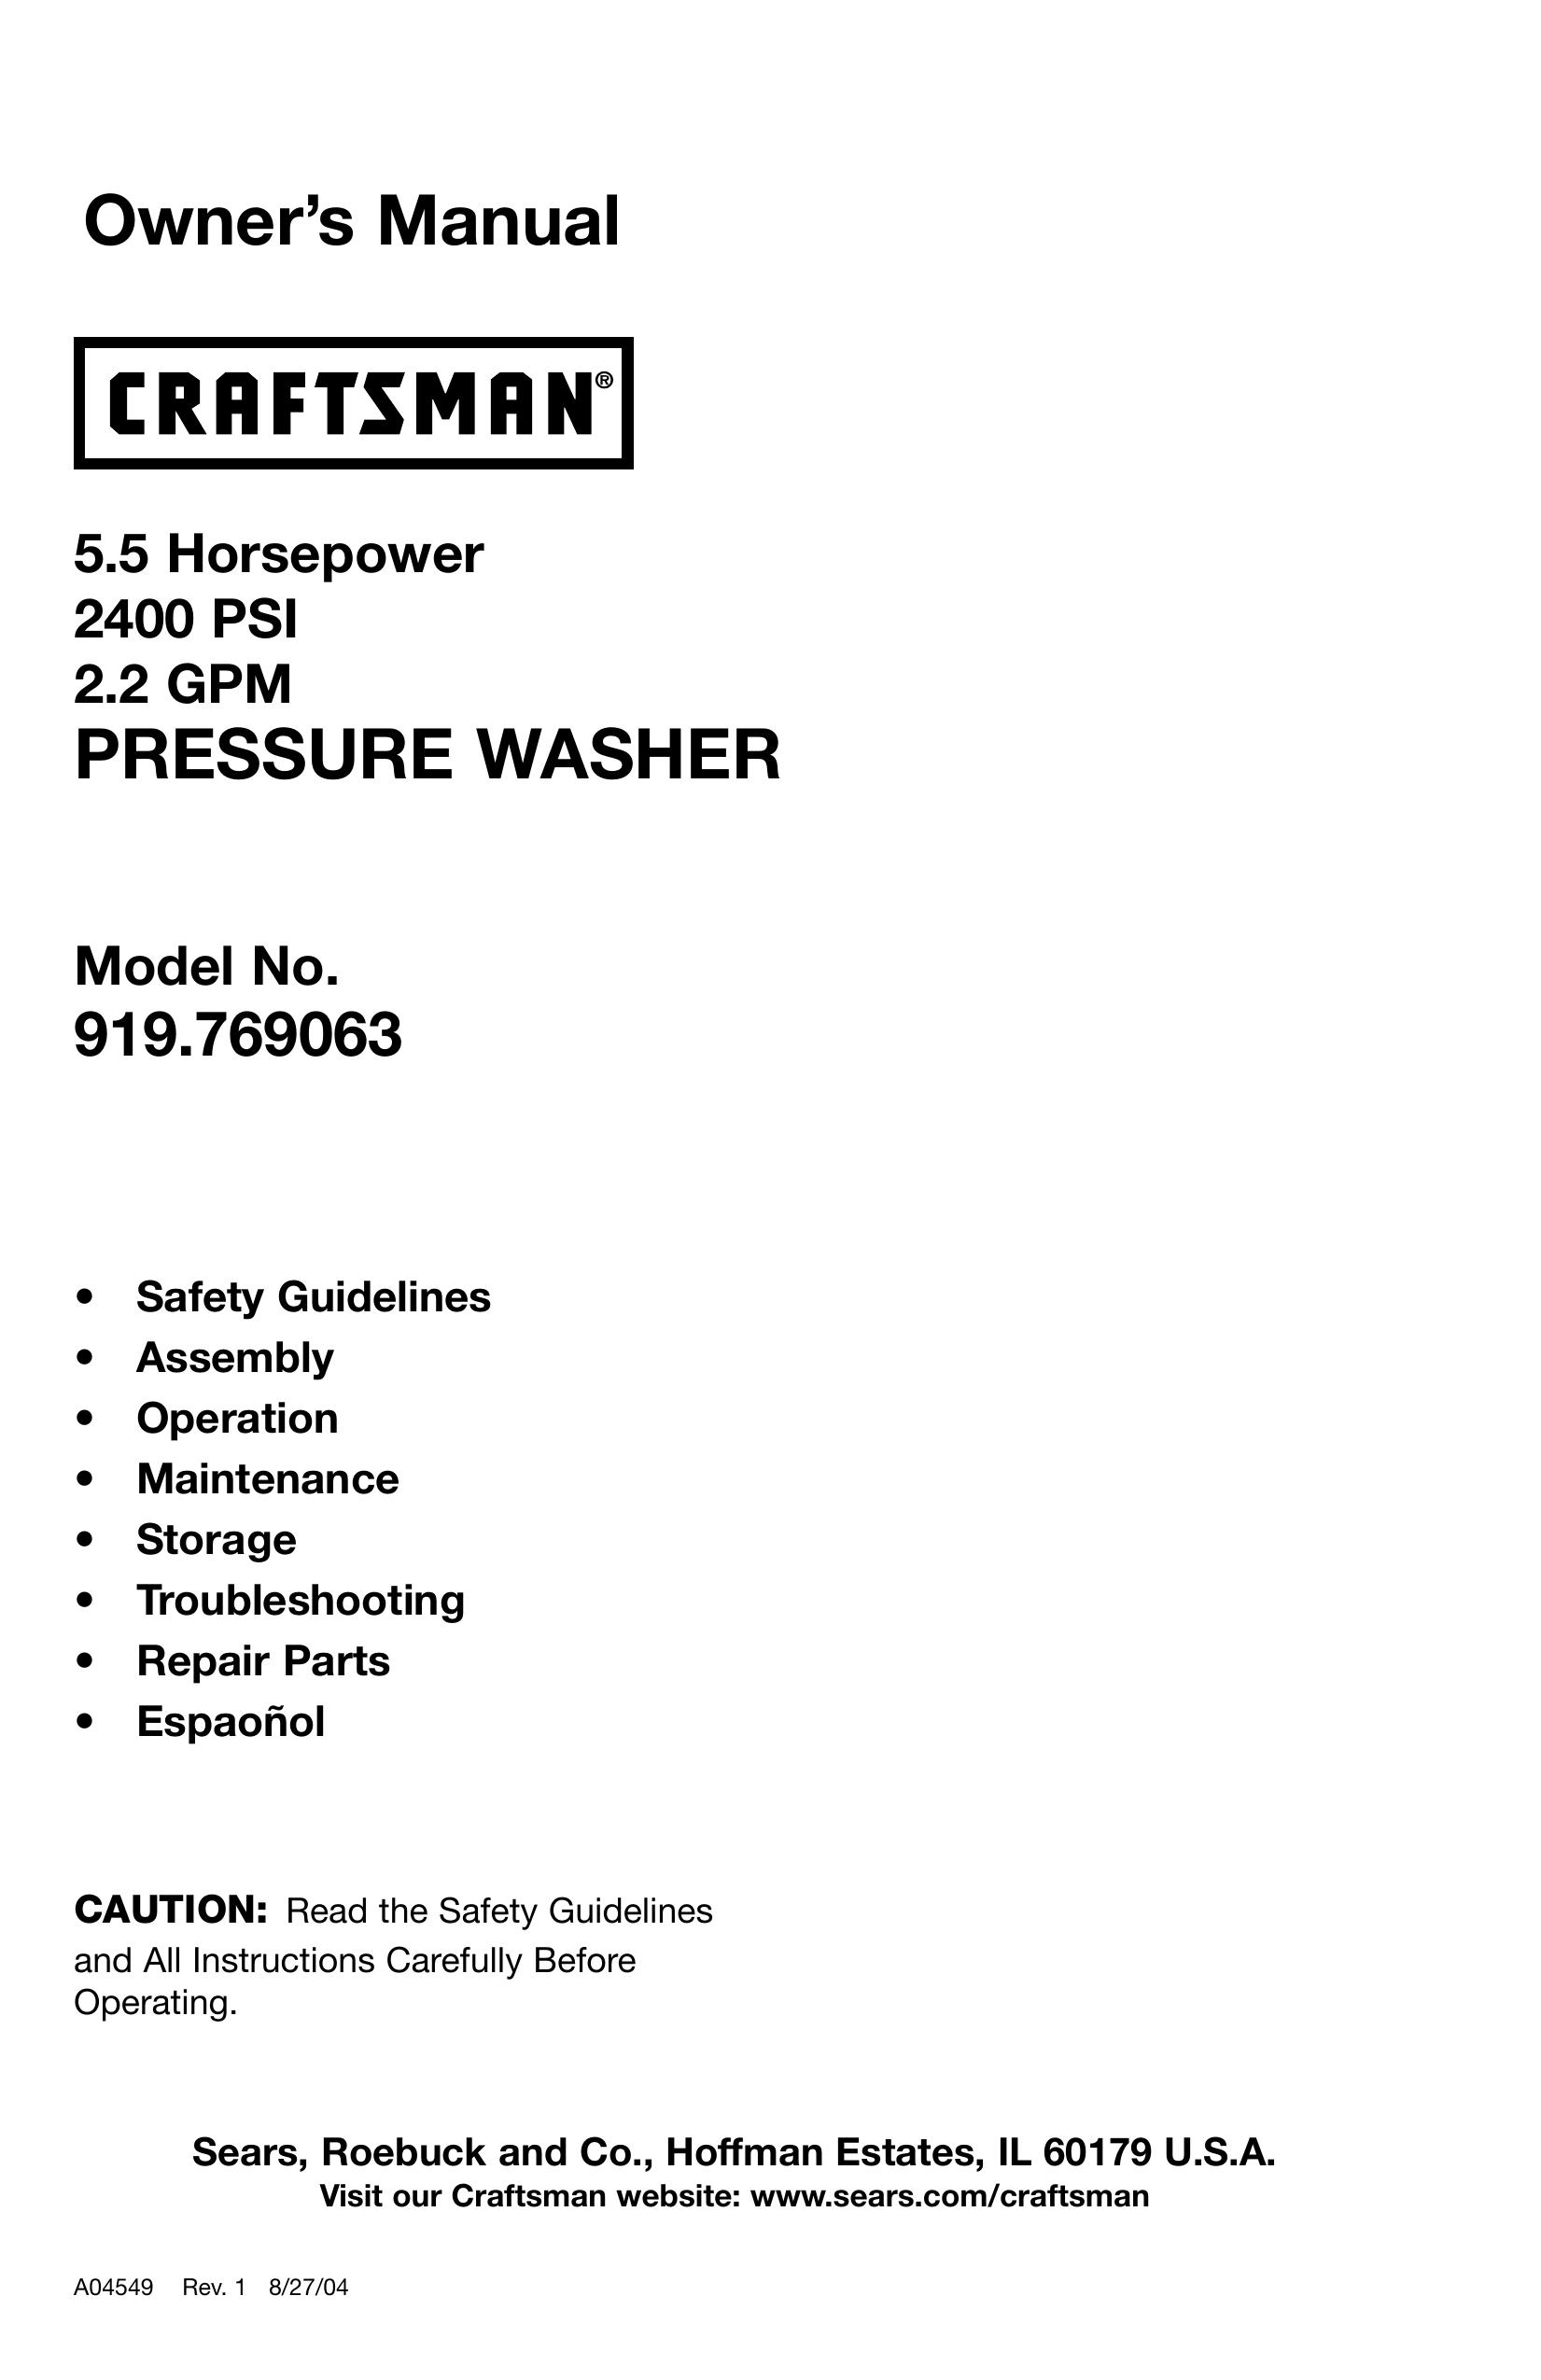 Craftsman 919.769063 Pressure Washer User Manual